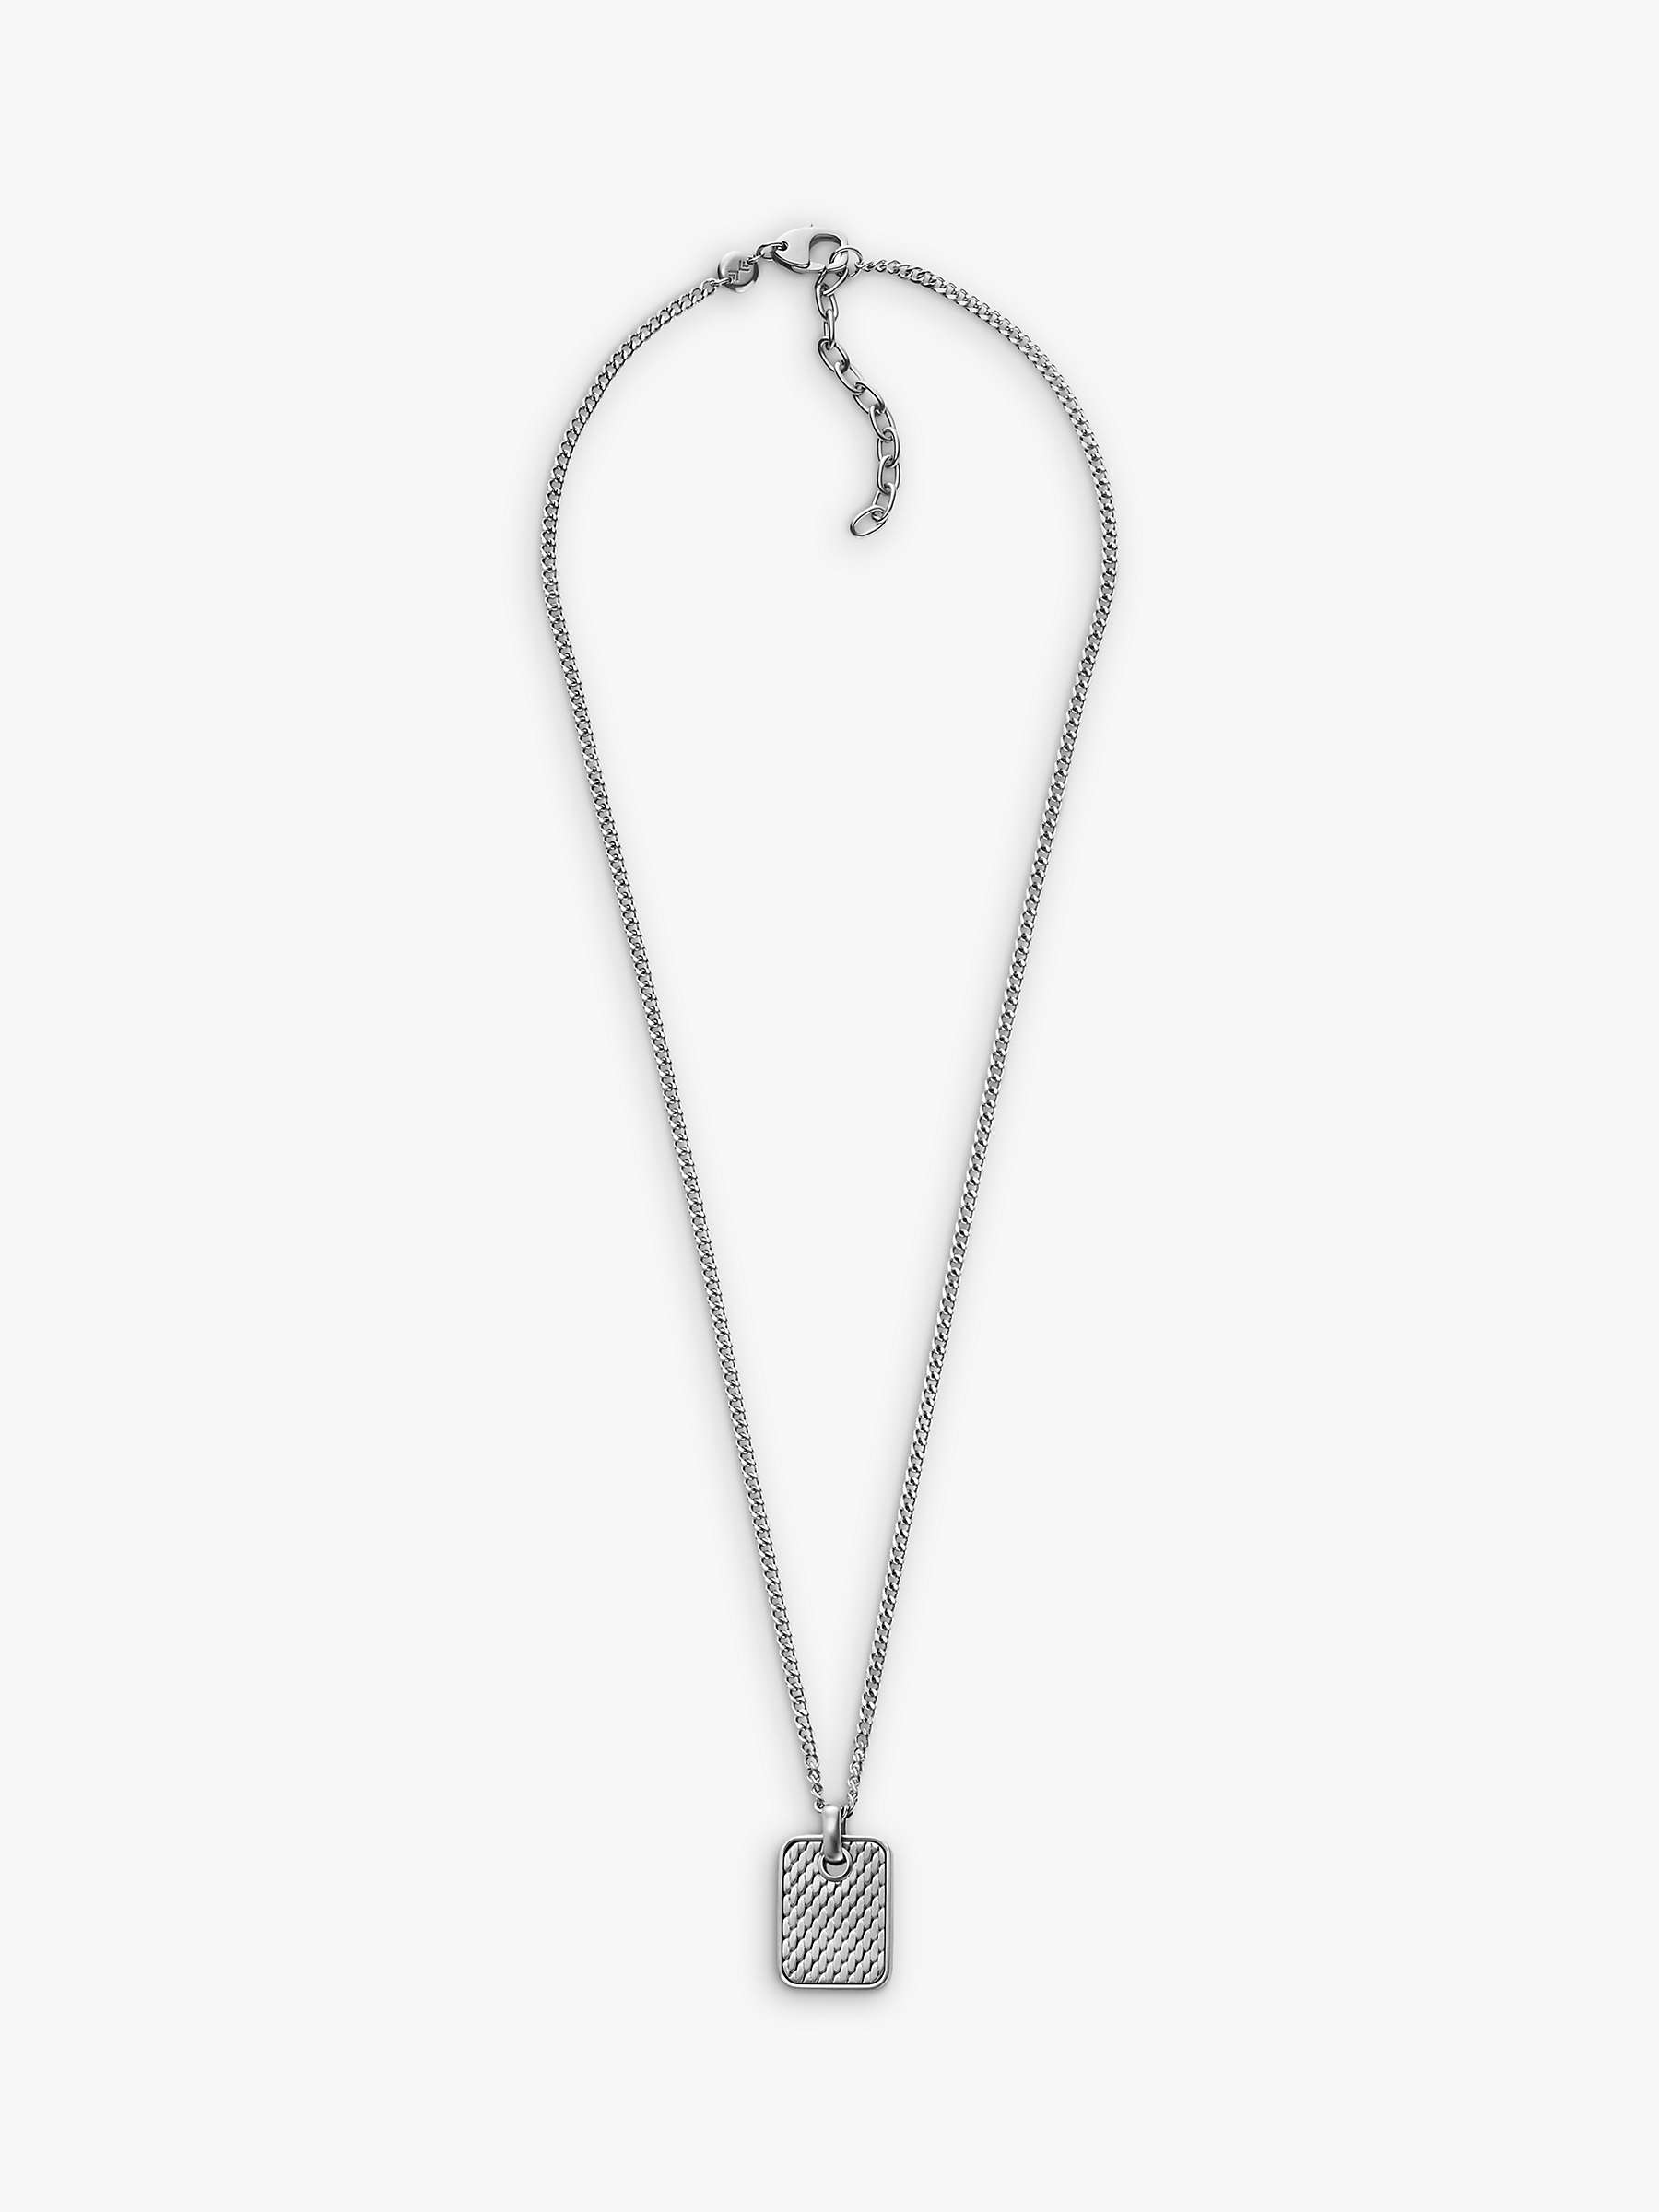 Buy Skagen Men's Textured Pendant Necklace, Silver Online at johnlewis.com